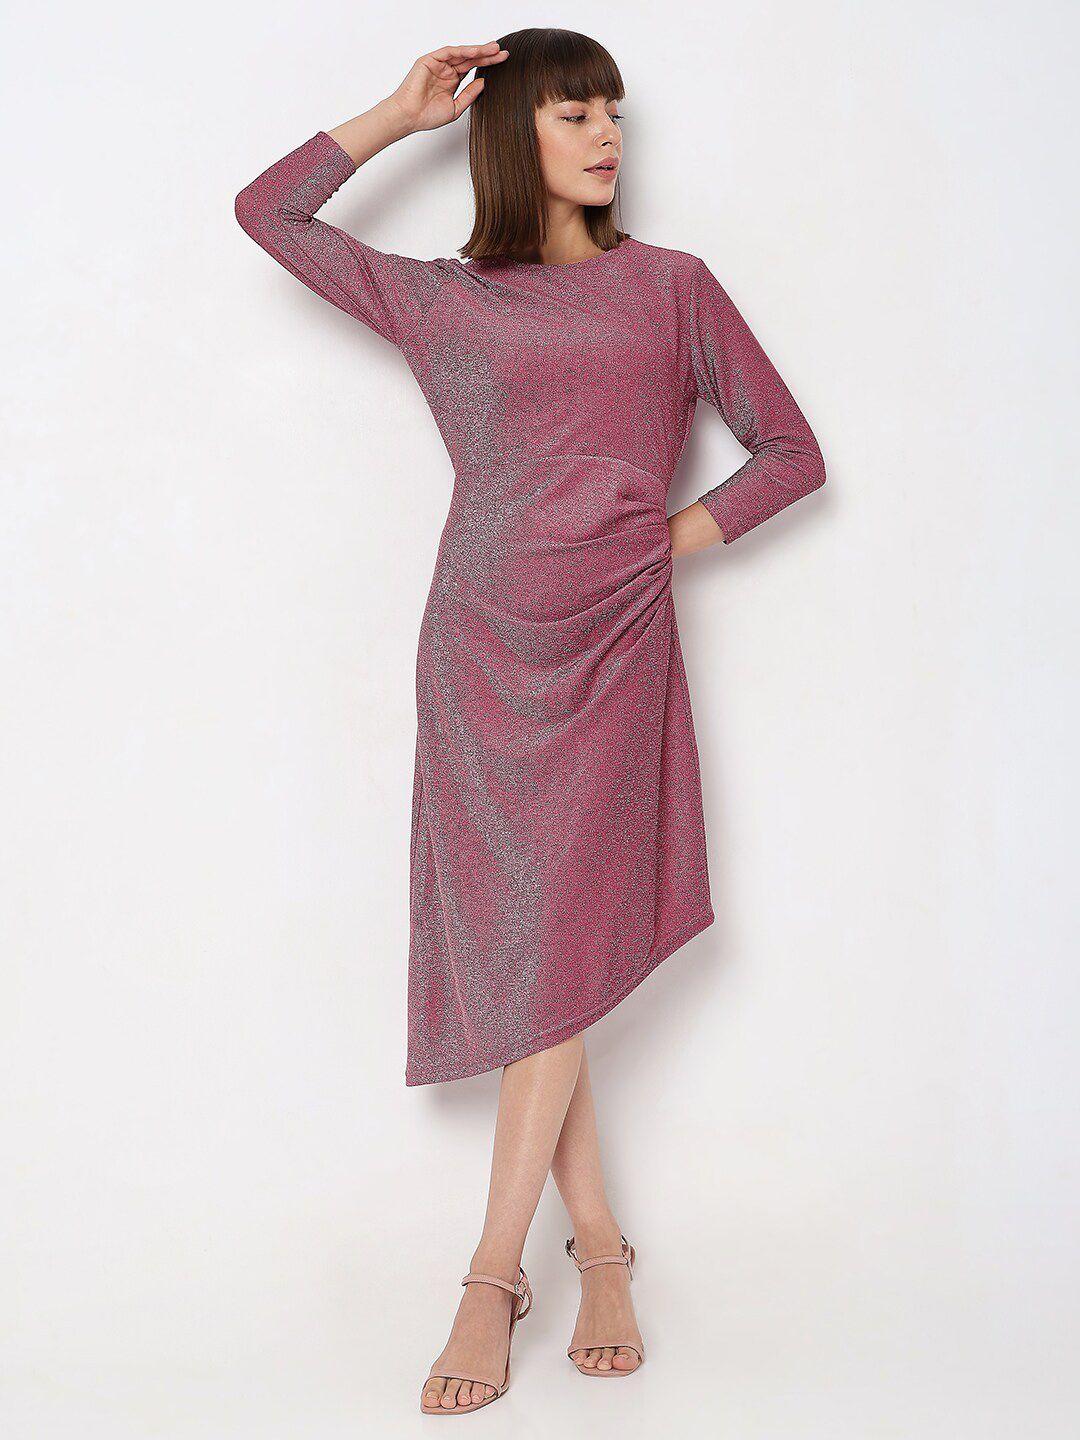 vero moda self design ruched bling & sparkly embellished a-line midi dress